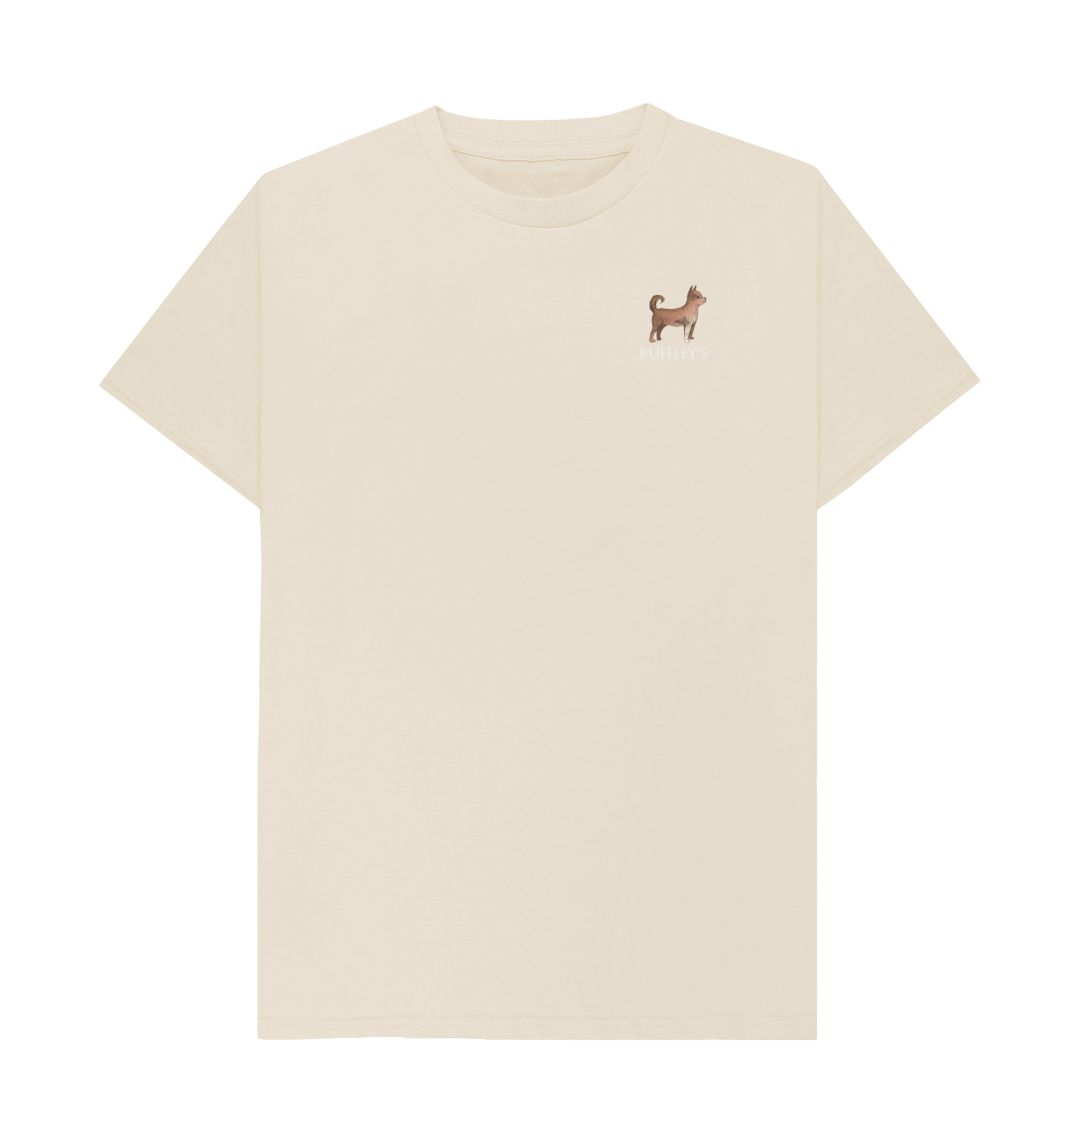 Oat Chihuahua - Mens T-Shirt